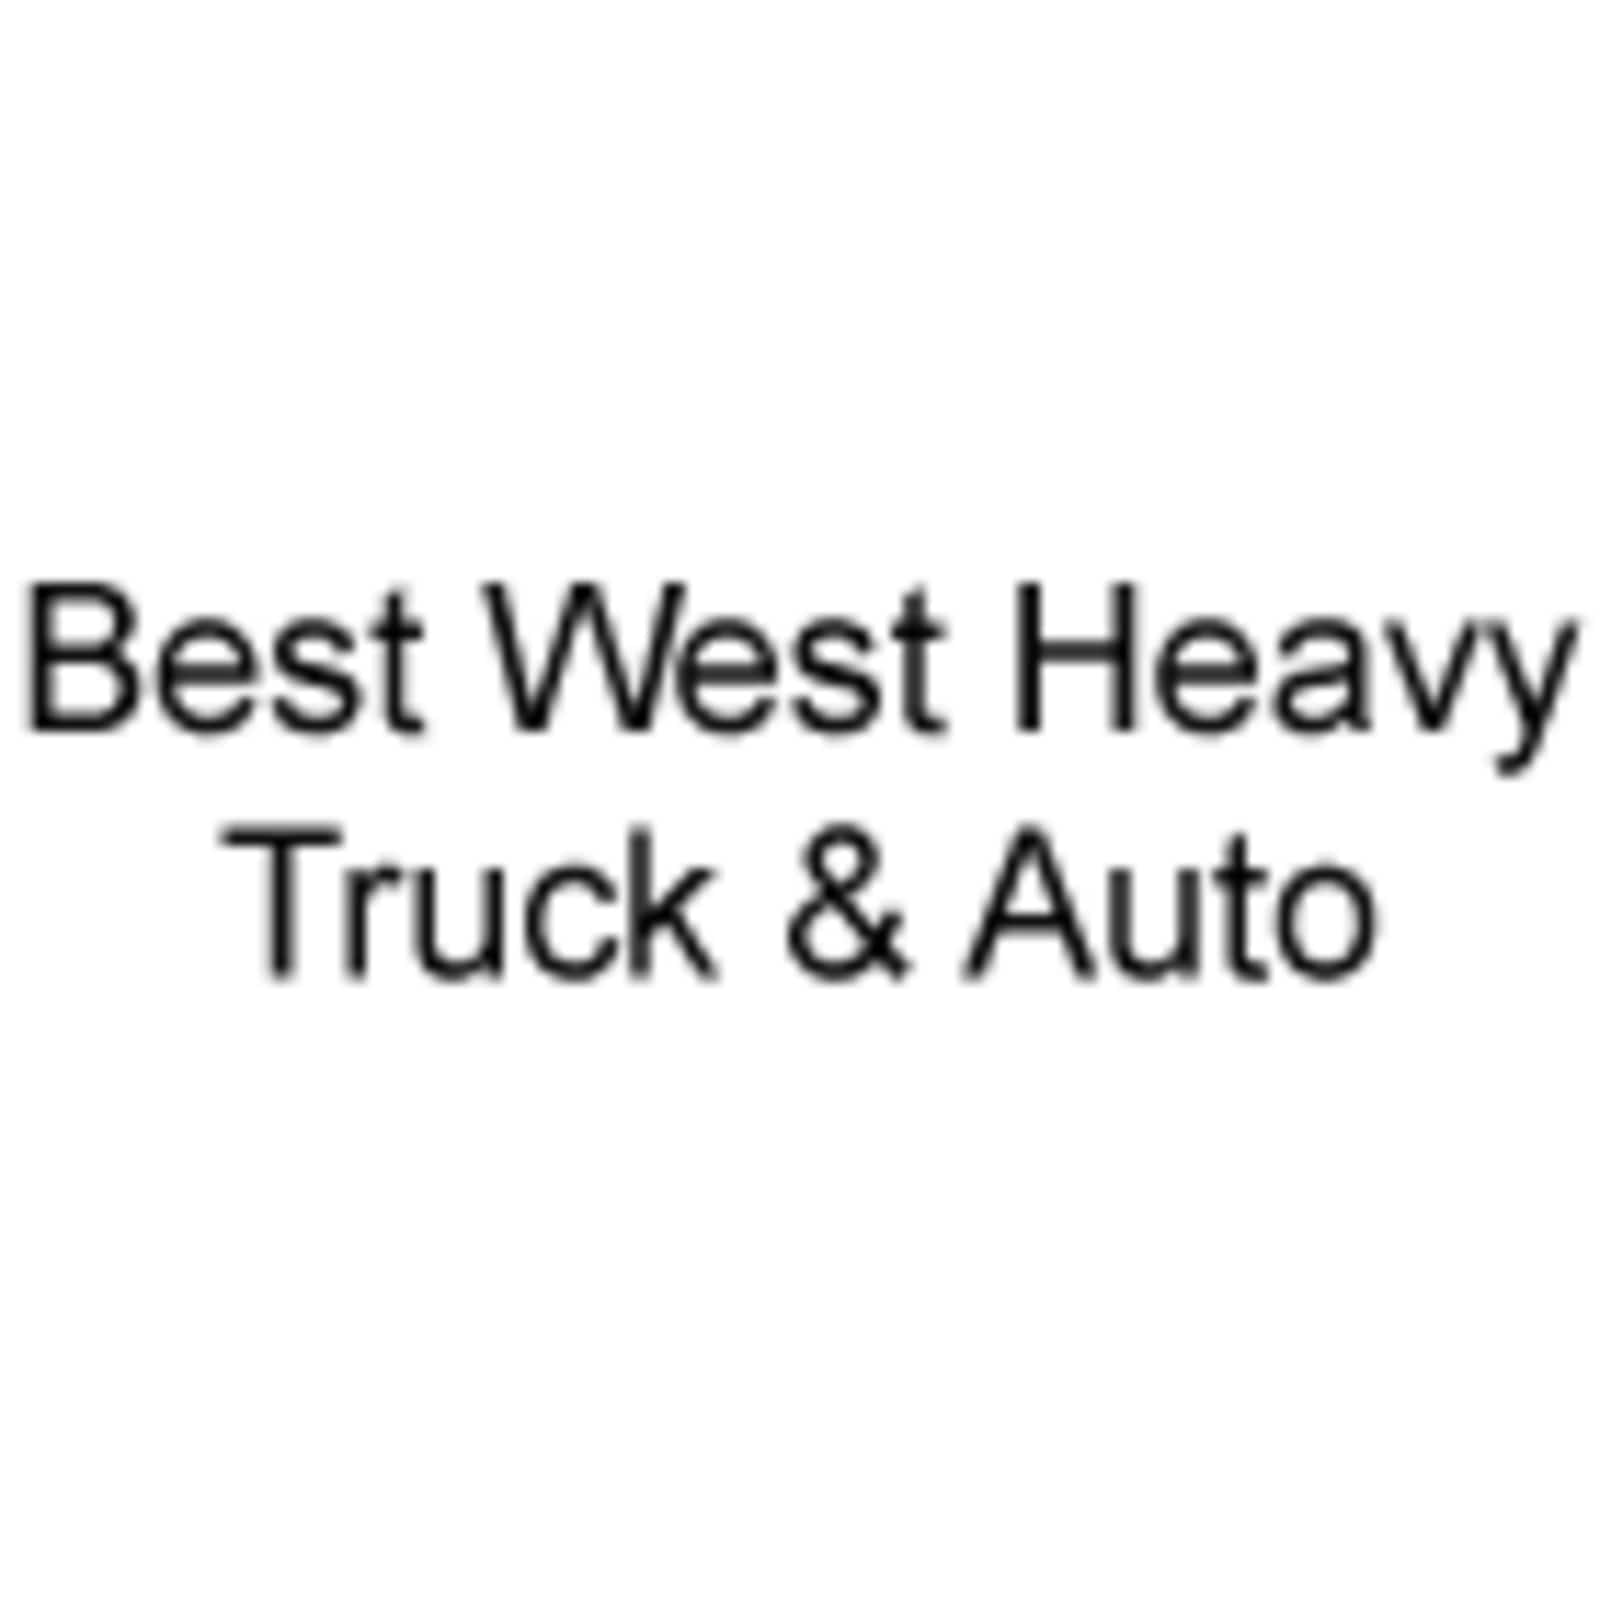 Best West Heavy Truck & Auto 4718 57 St, Wetaskiwin Alberta T9A 2B7